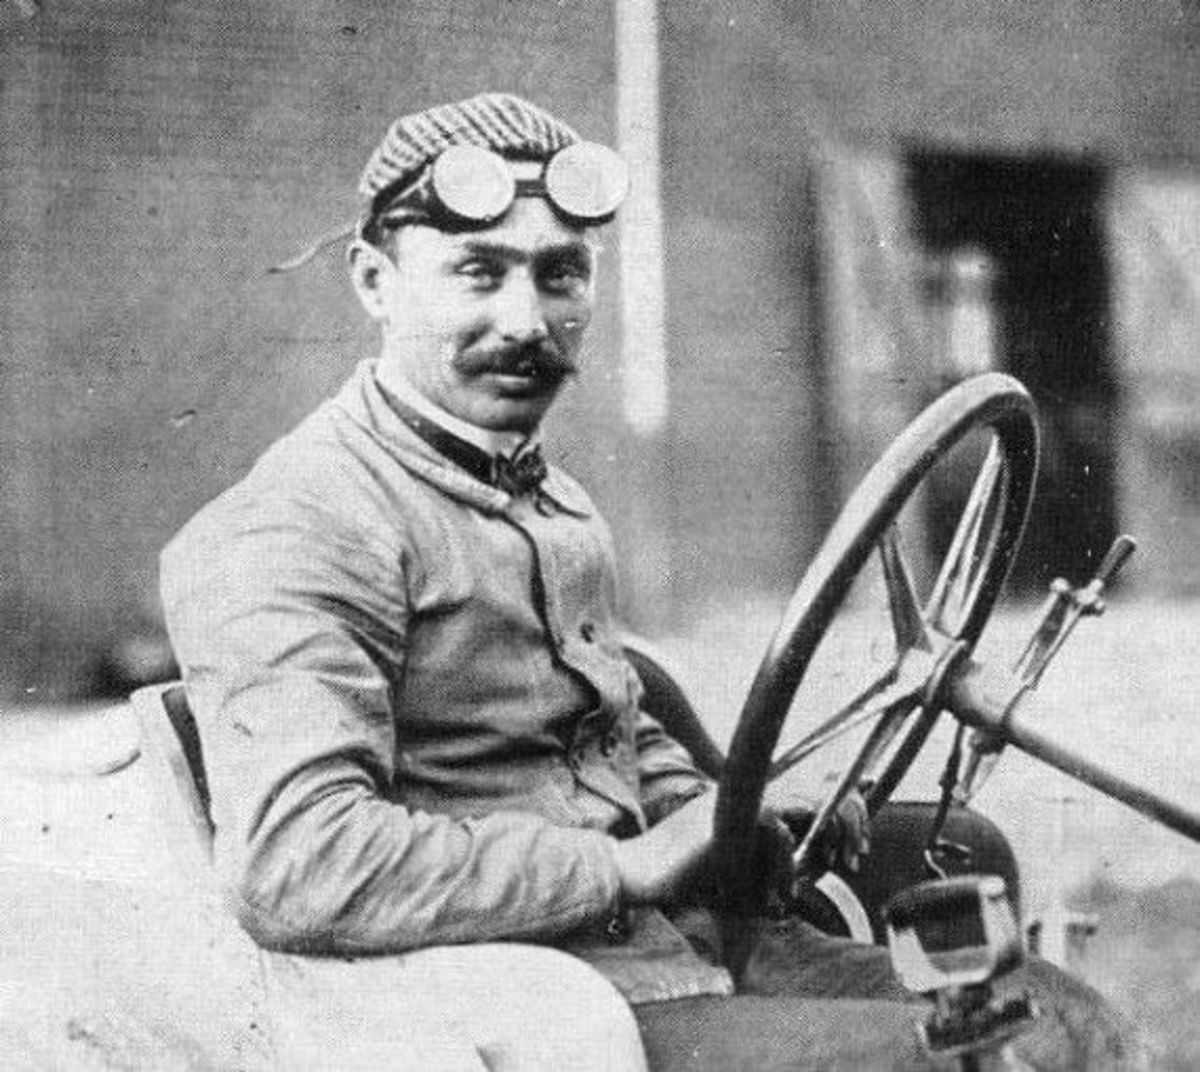 Winner of the First Grand Prix Race: Ferenc Szisz